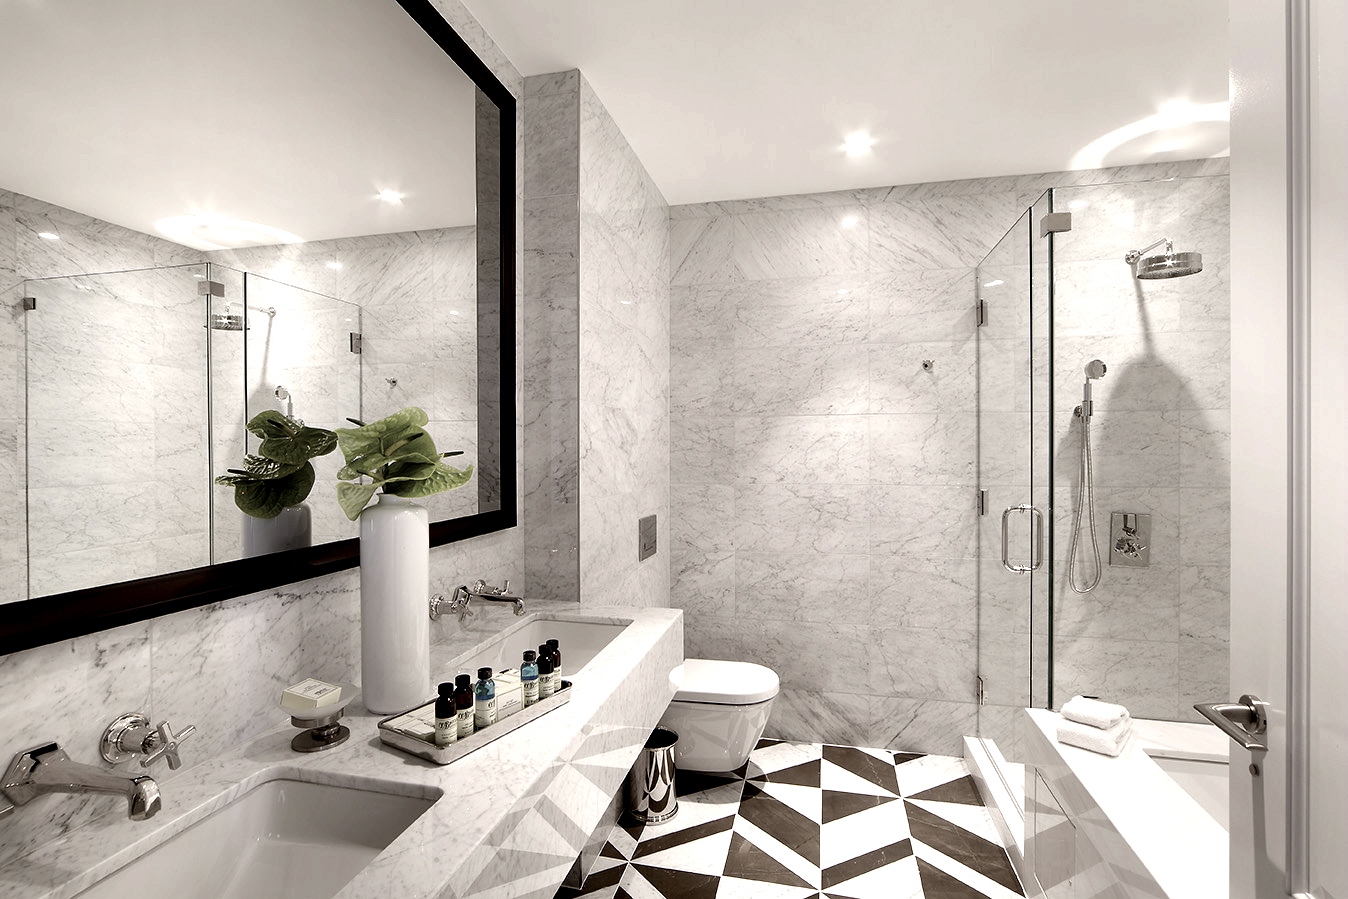 Residential Luxury Interior Design Company in NYC, NY and the Hamptons, NY | Joe Ginsberg Design